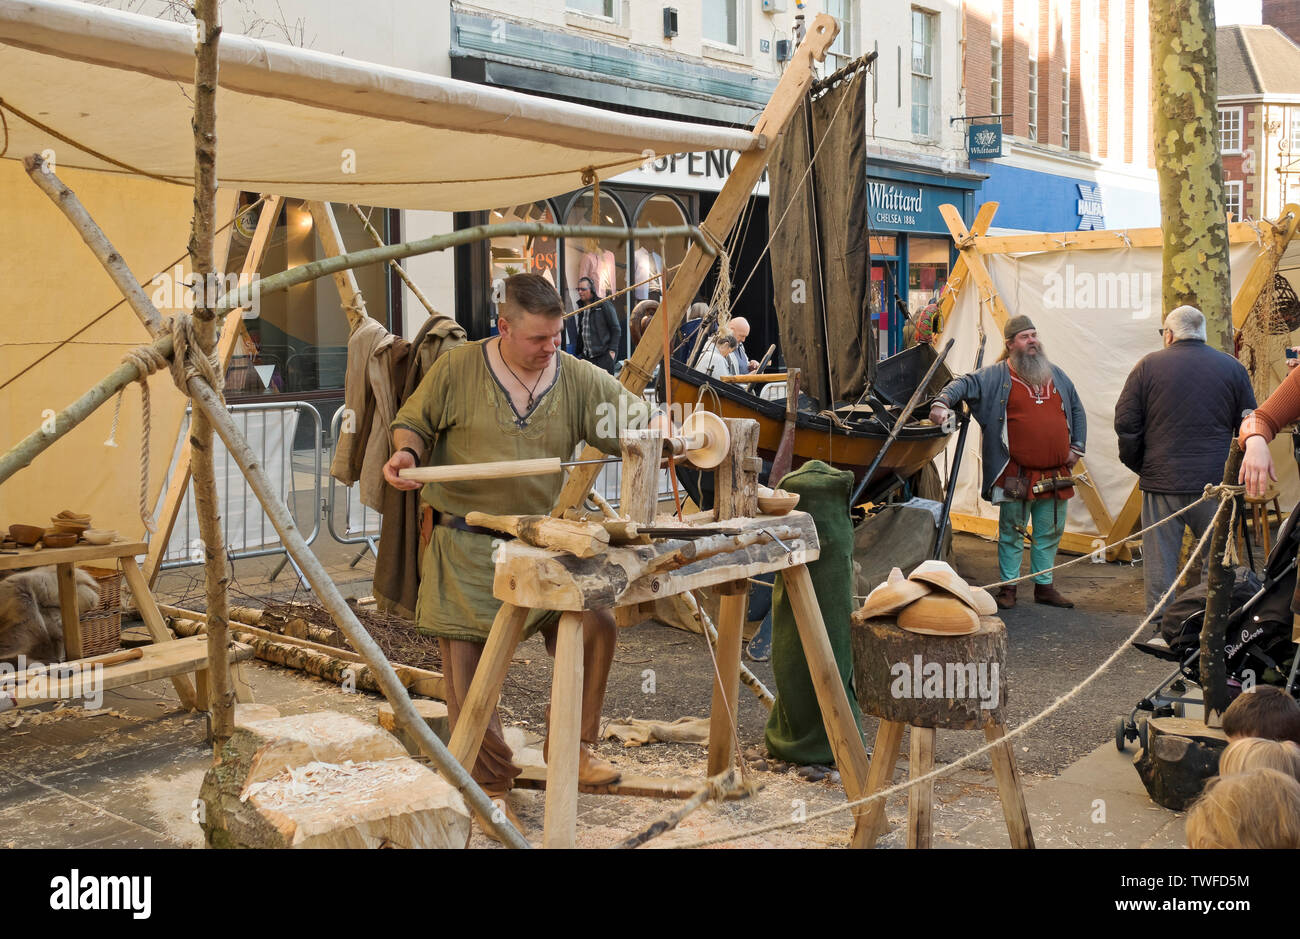 Man demonstrating wood turning at the Viking Festival. Stock Photo